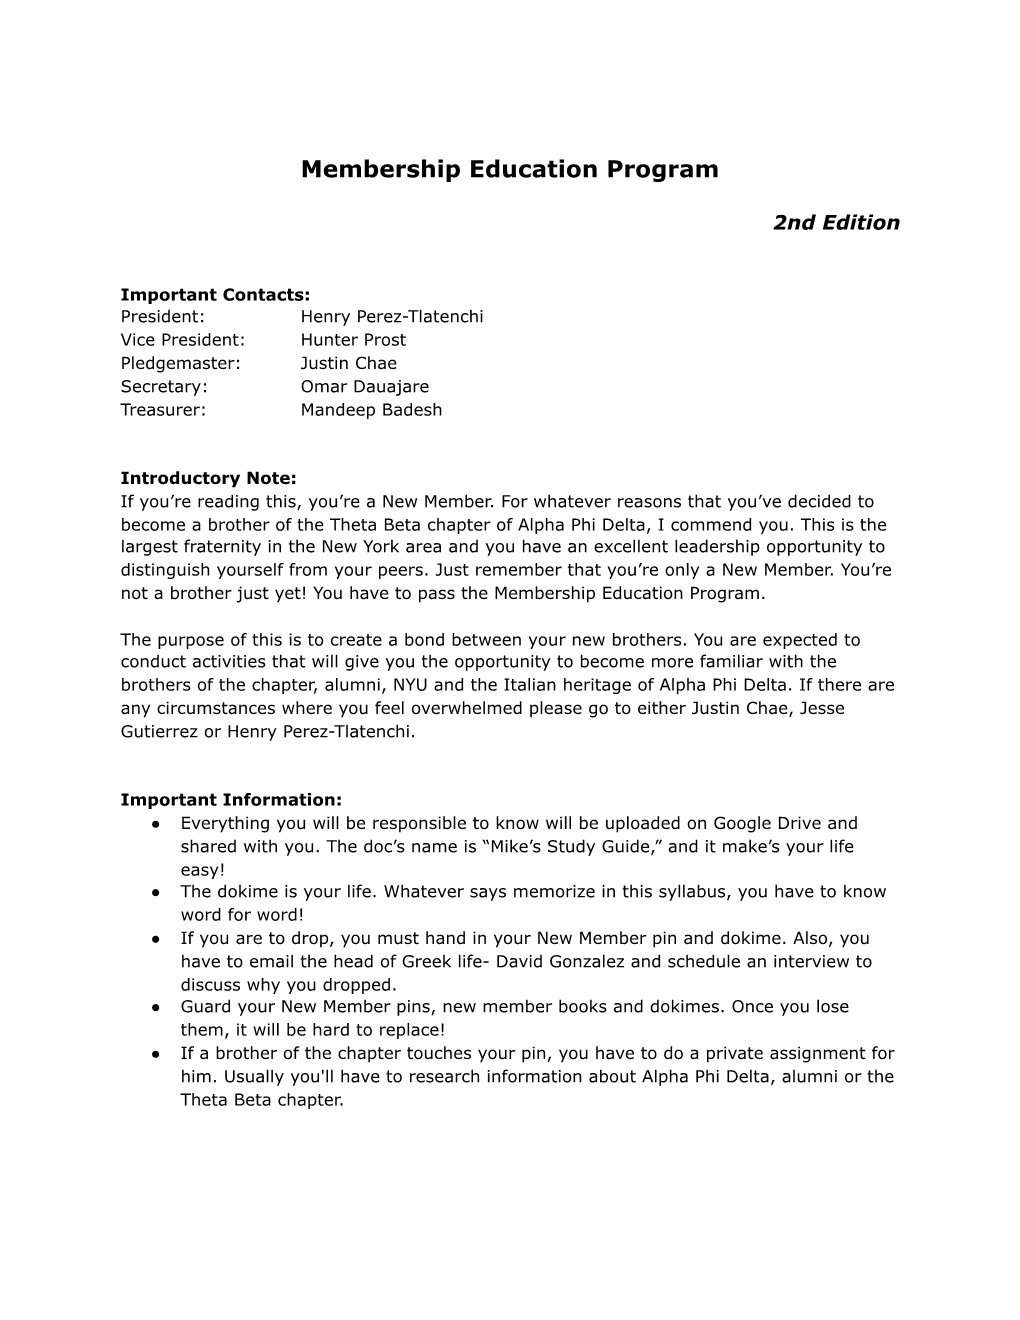 Membership Education Program 2Nd Edition